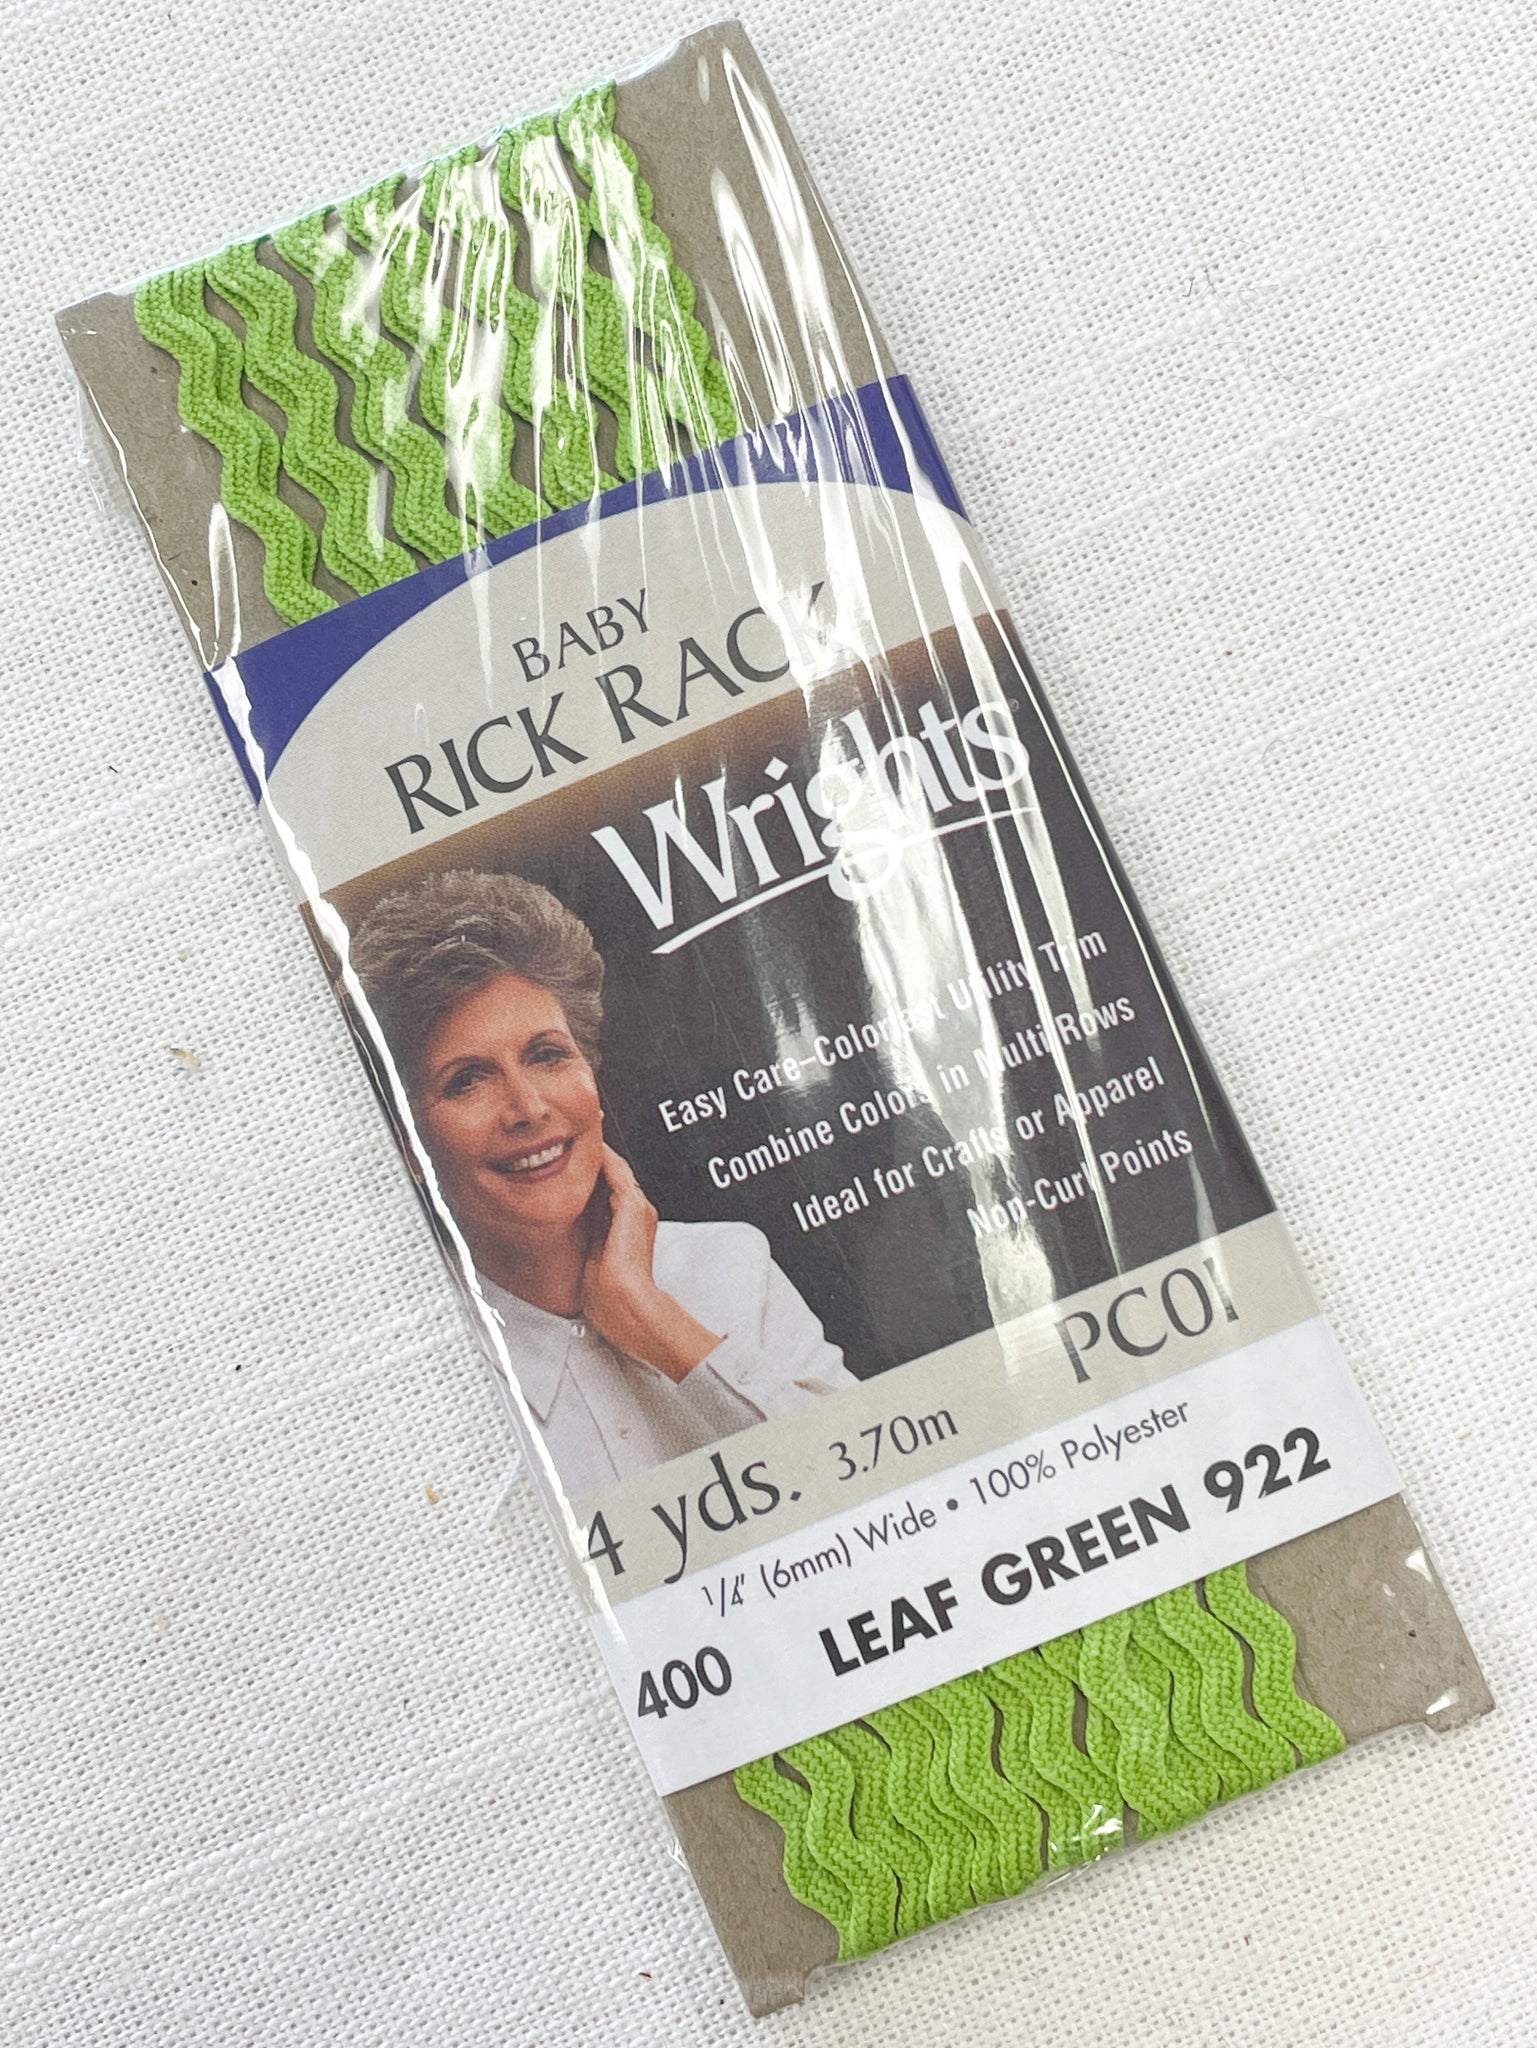 SALE 4 YD Polyester Rick Rack - Leaf Green